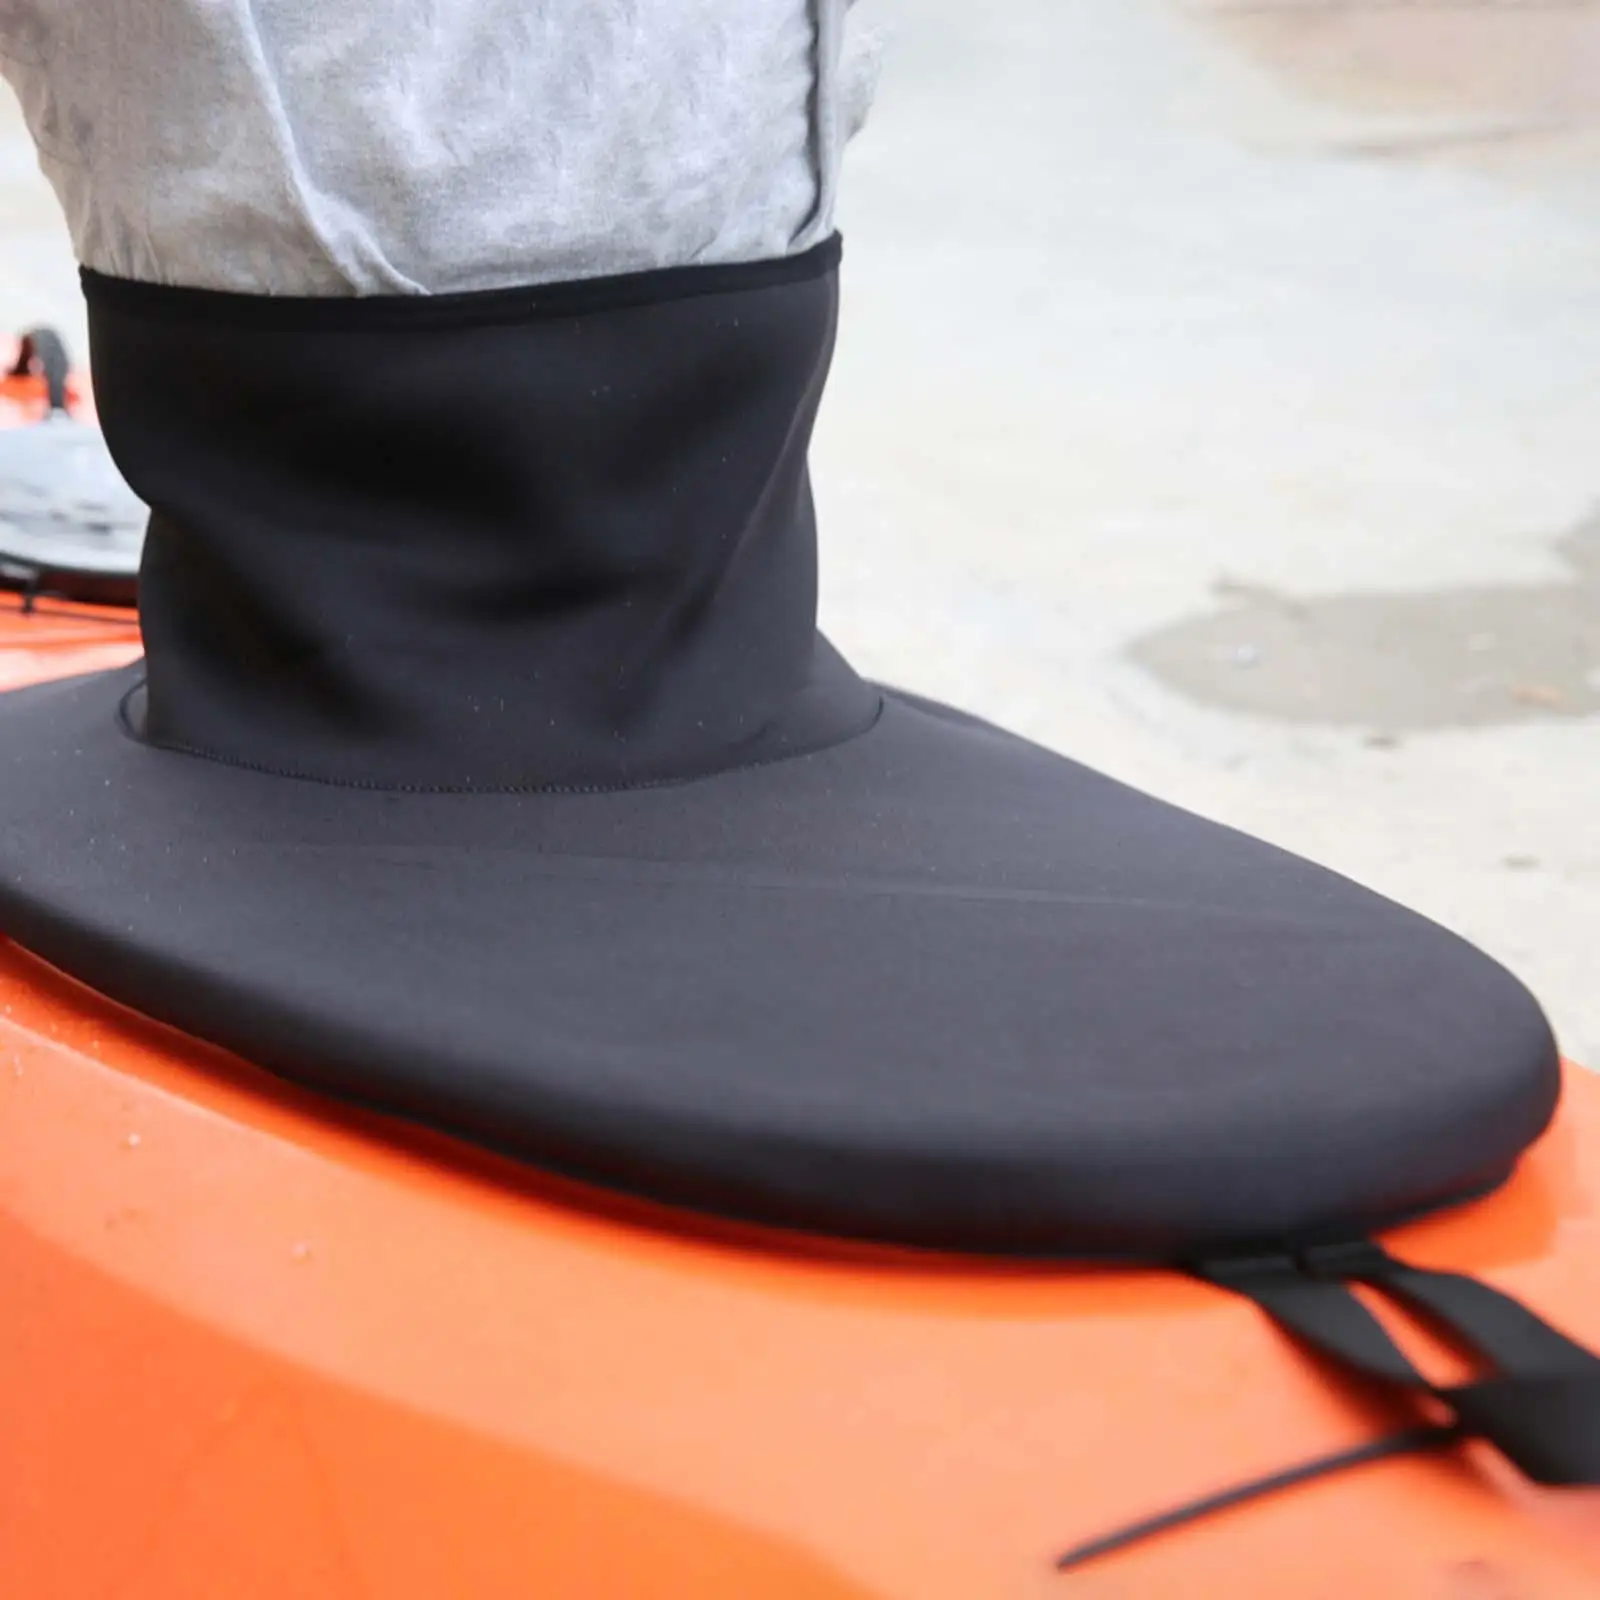 

Universal Kayak Spray Skirt Cover Splash Deck Sprayskirt Neoprene Adjustable for Paddling Boating Marine Water Sports Black